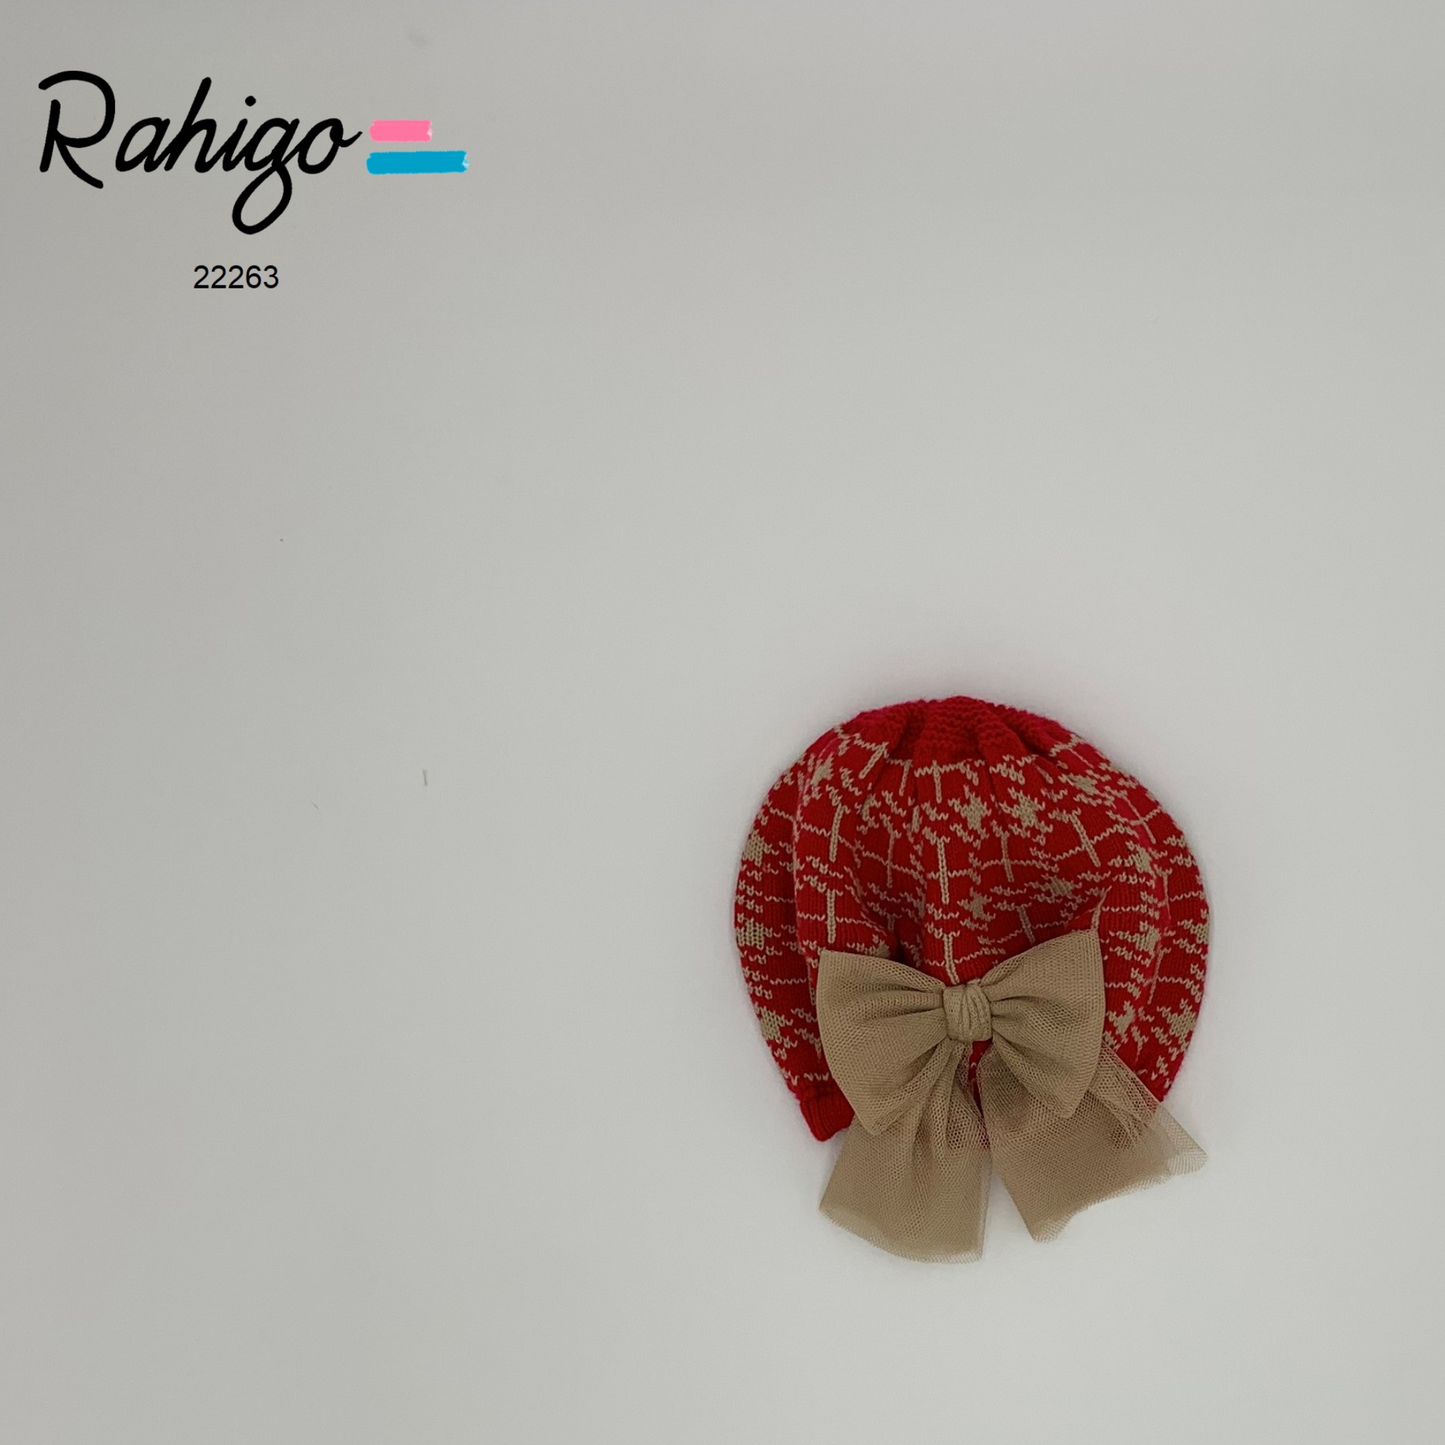 Rahigo Girls Red/Camel Beret